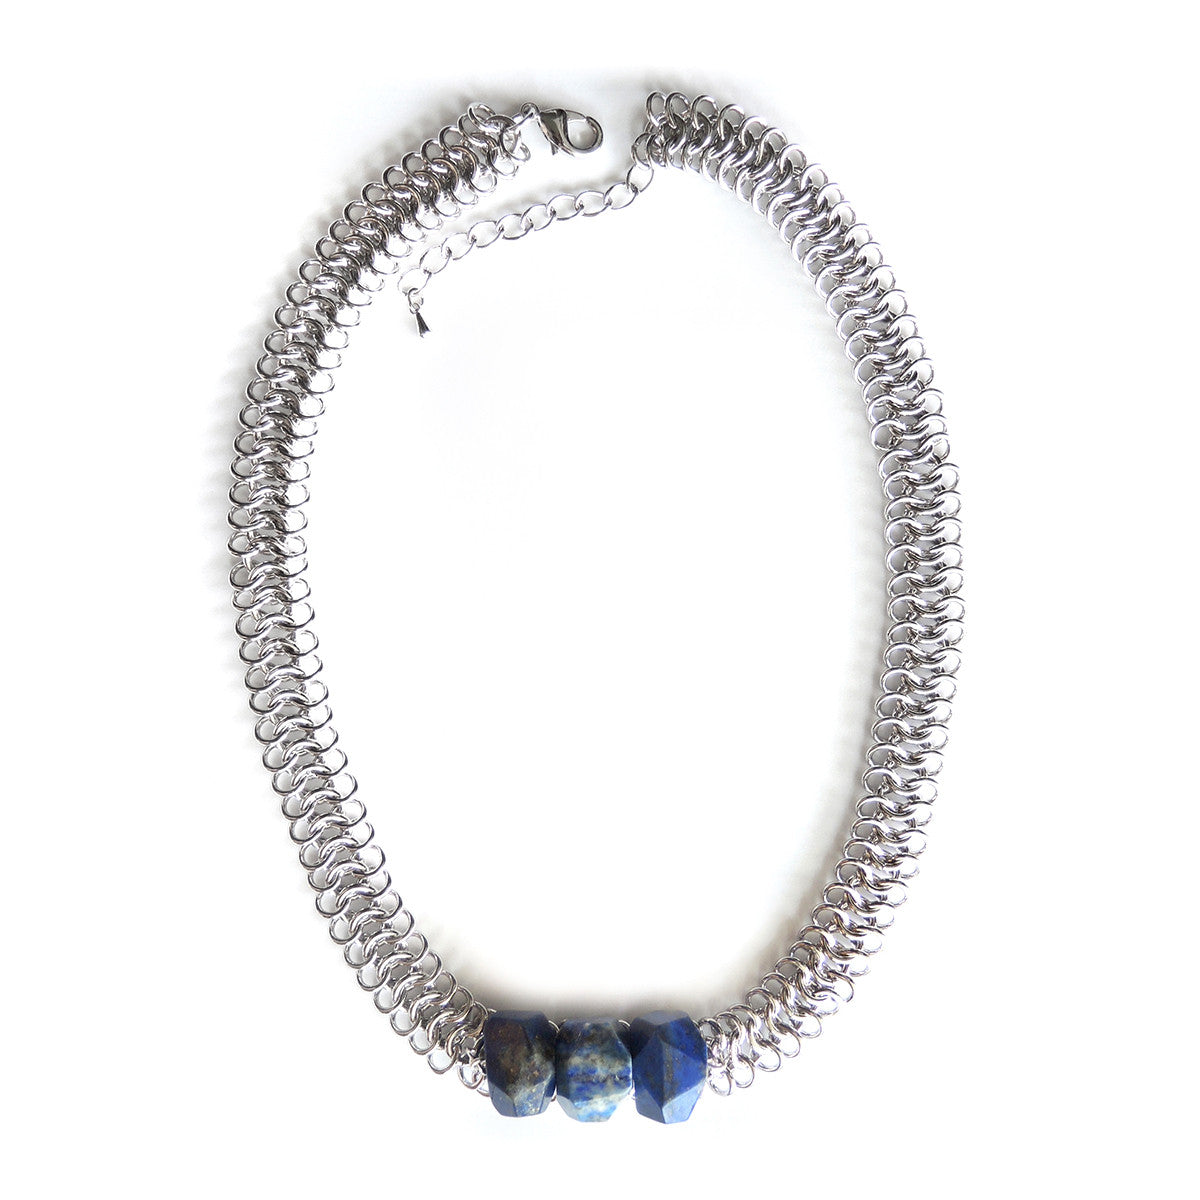 Lapis Lazuli Statement Necklace - Chainless Brain